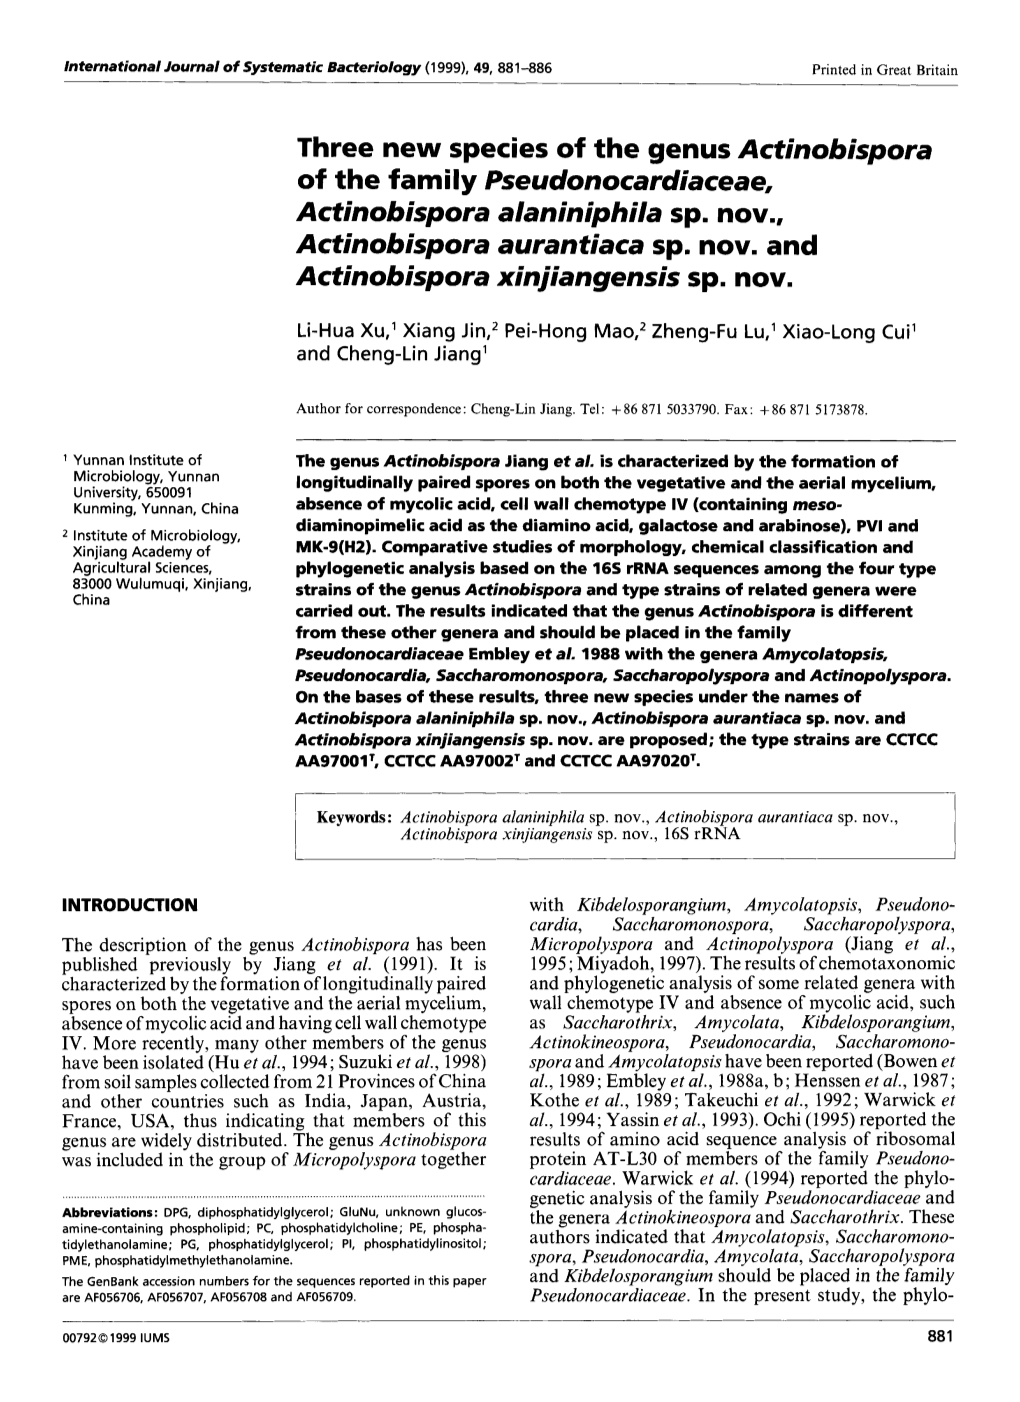 Three New Species of the Genus Actinobispora of the Family Pseudonocardiaceae, Actinobispora Alaniniphila Sp